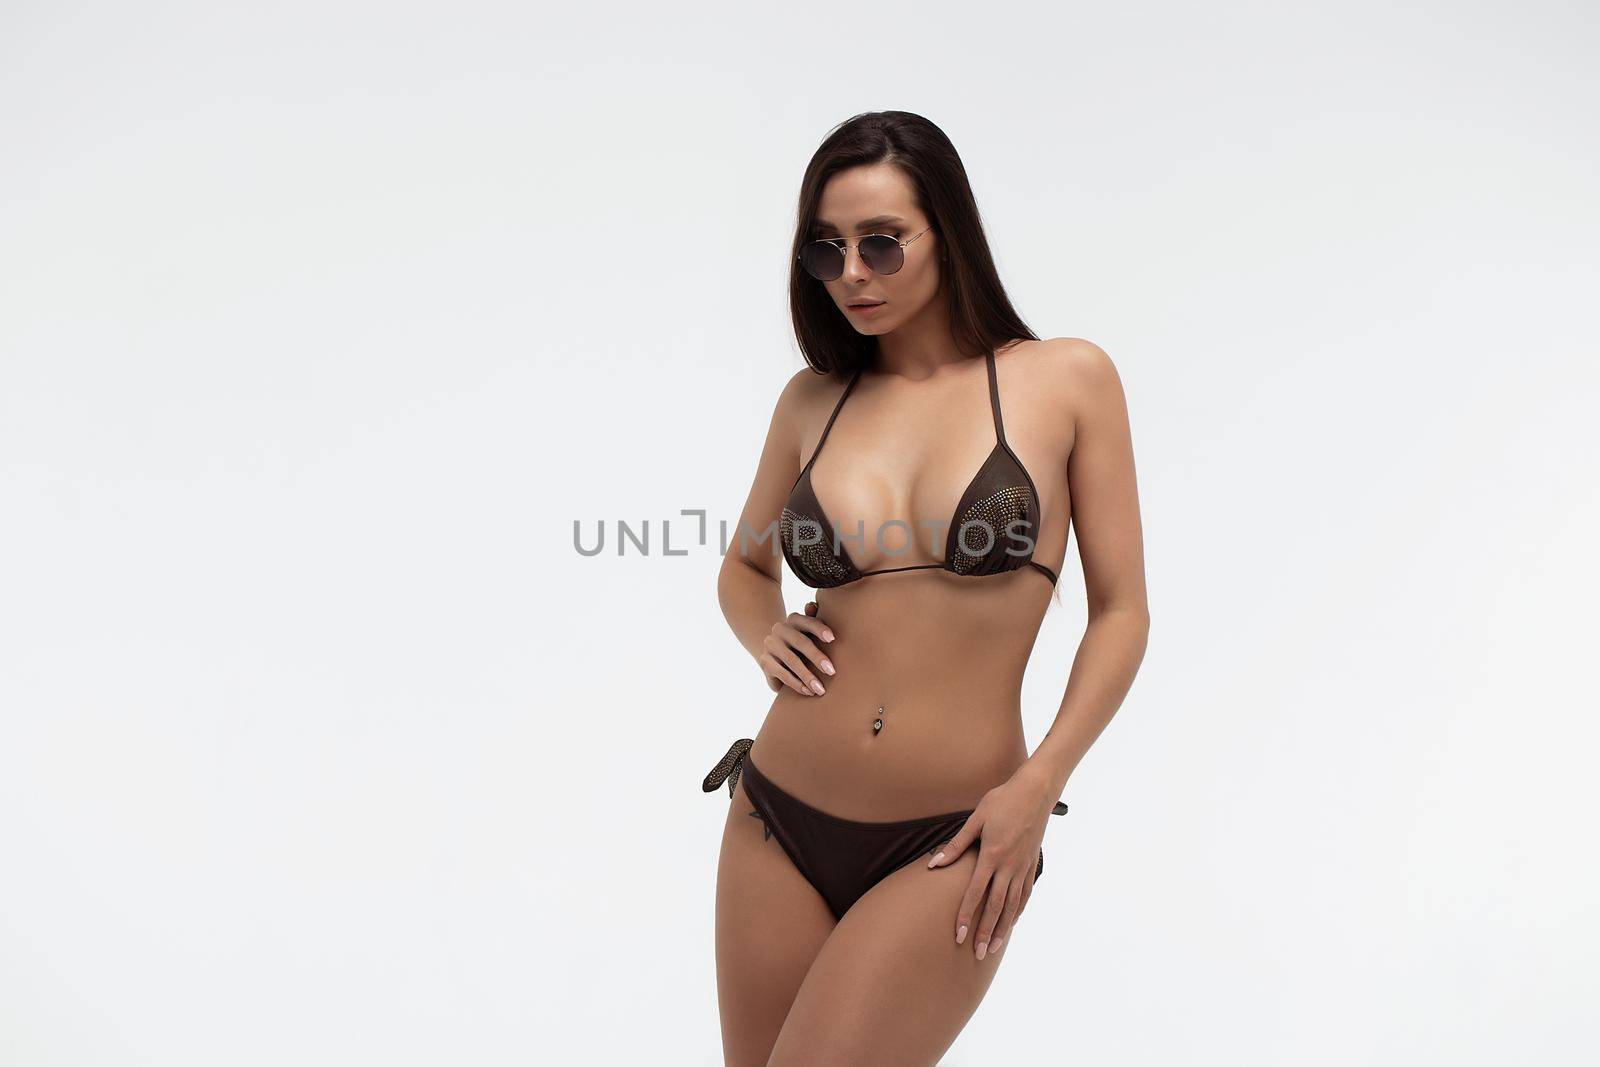 Hot sexy brunette in black bikini and sunglasses by 3KStudio